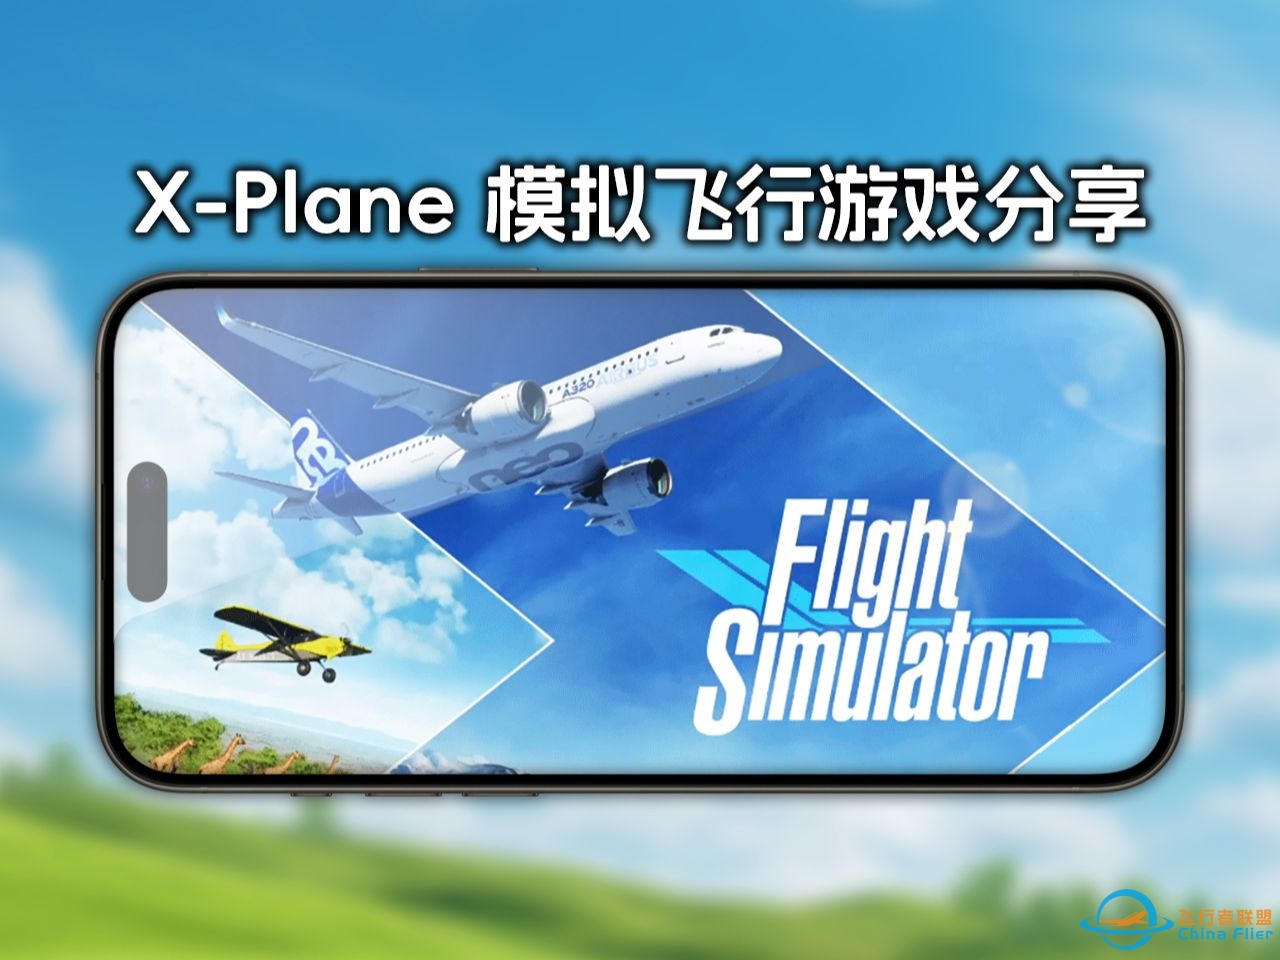 X-Plane Flight Simulator（全飞机）苹果iOS游戏分享-4935 